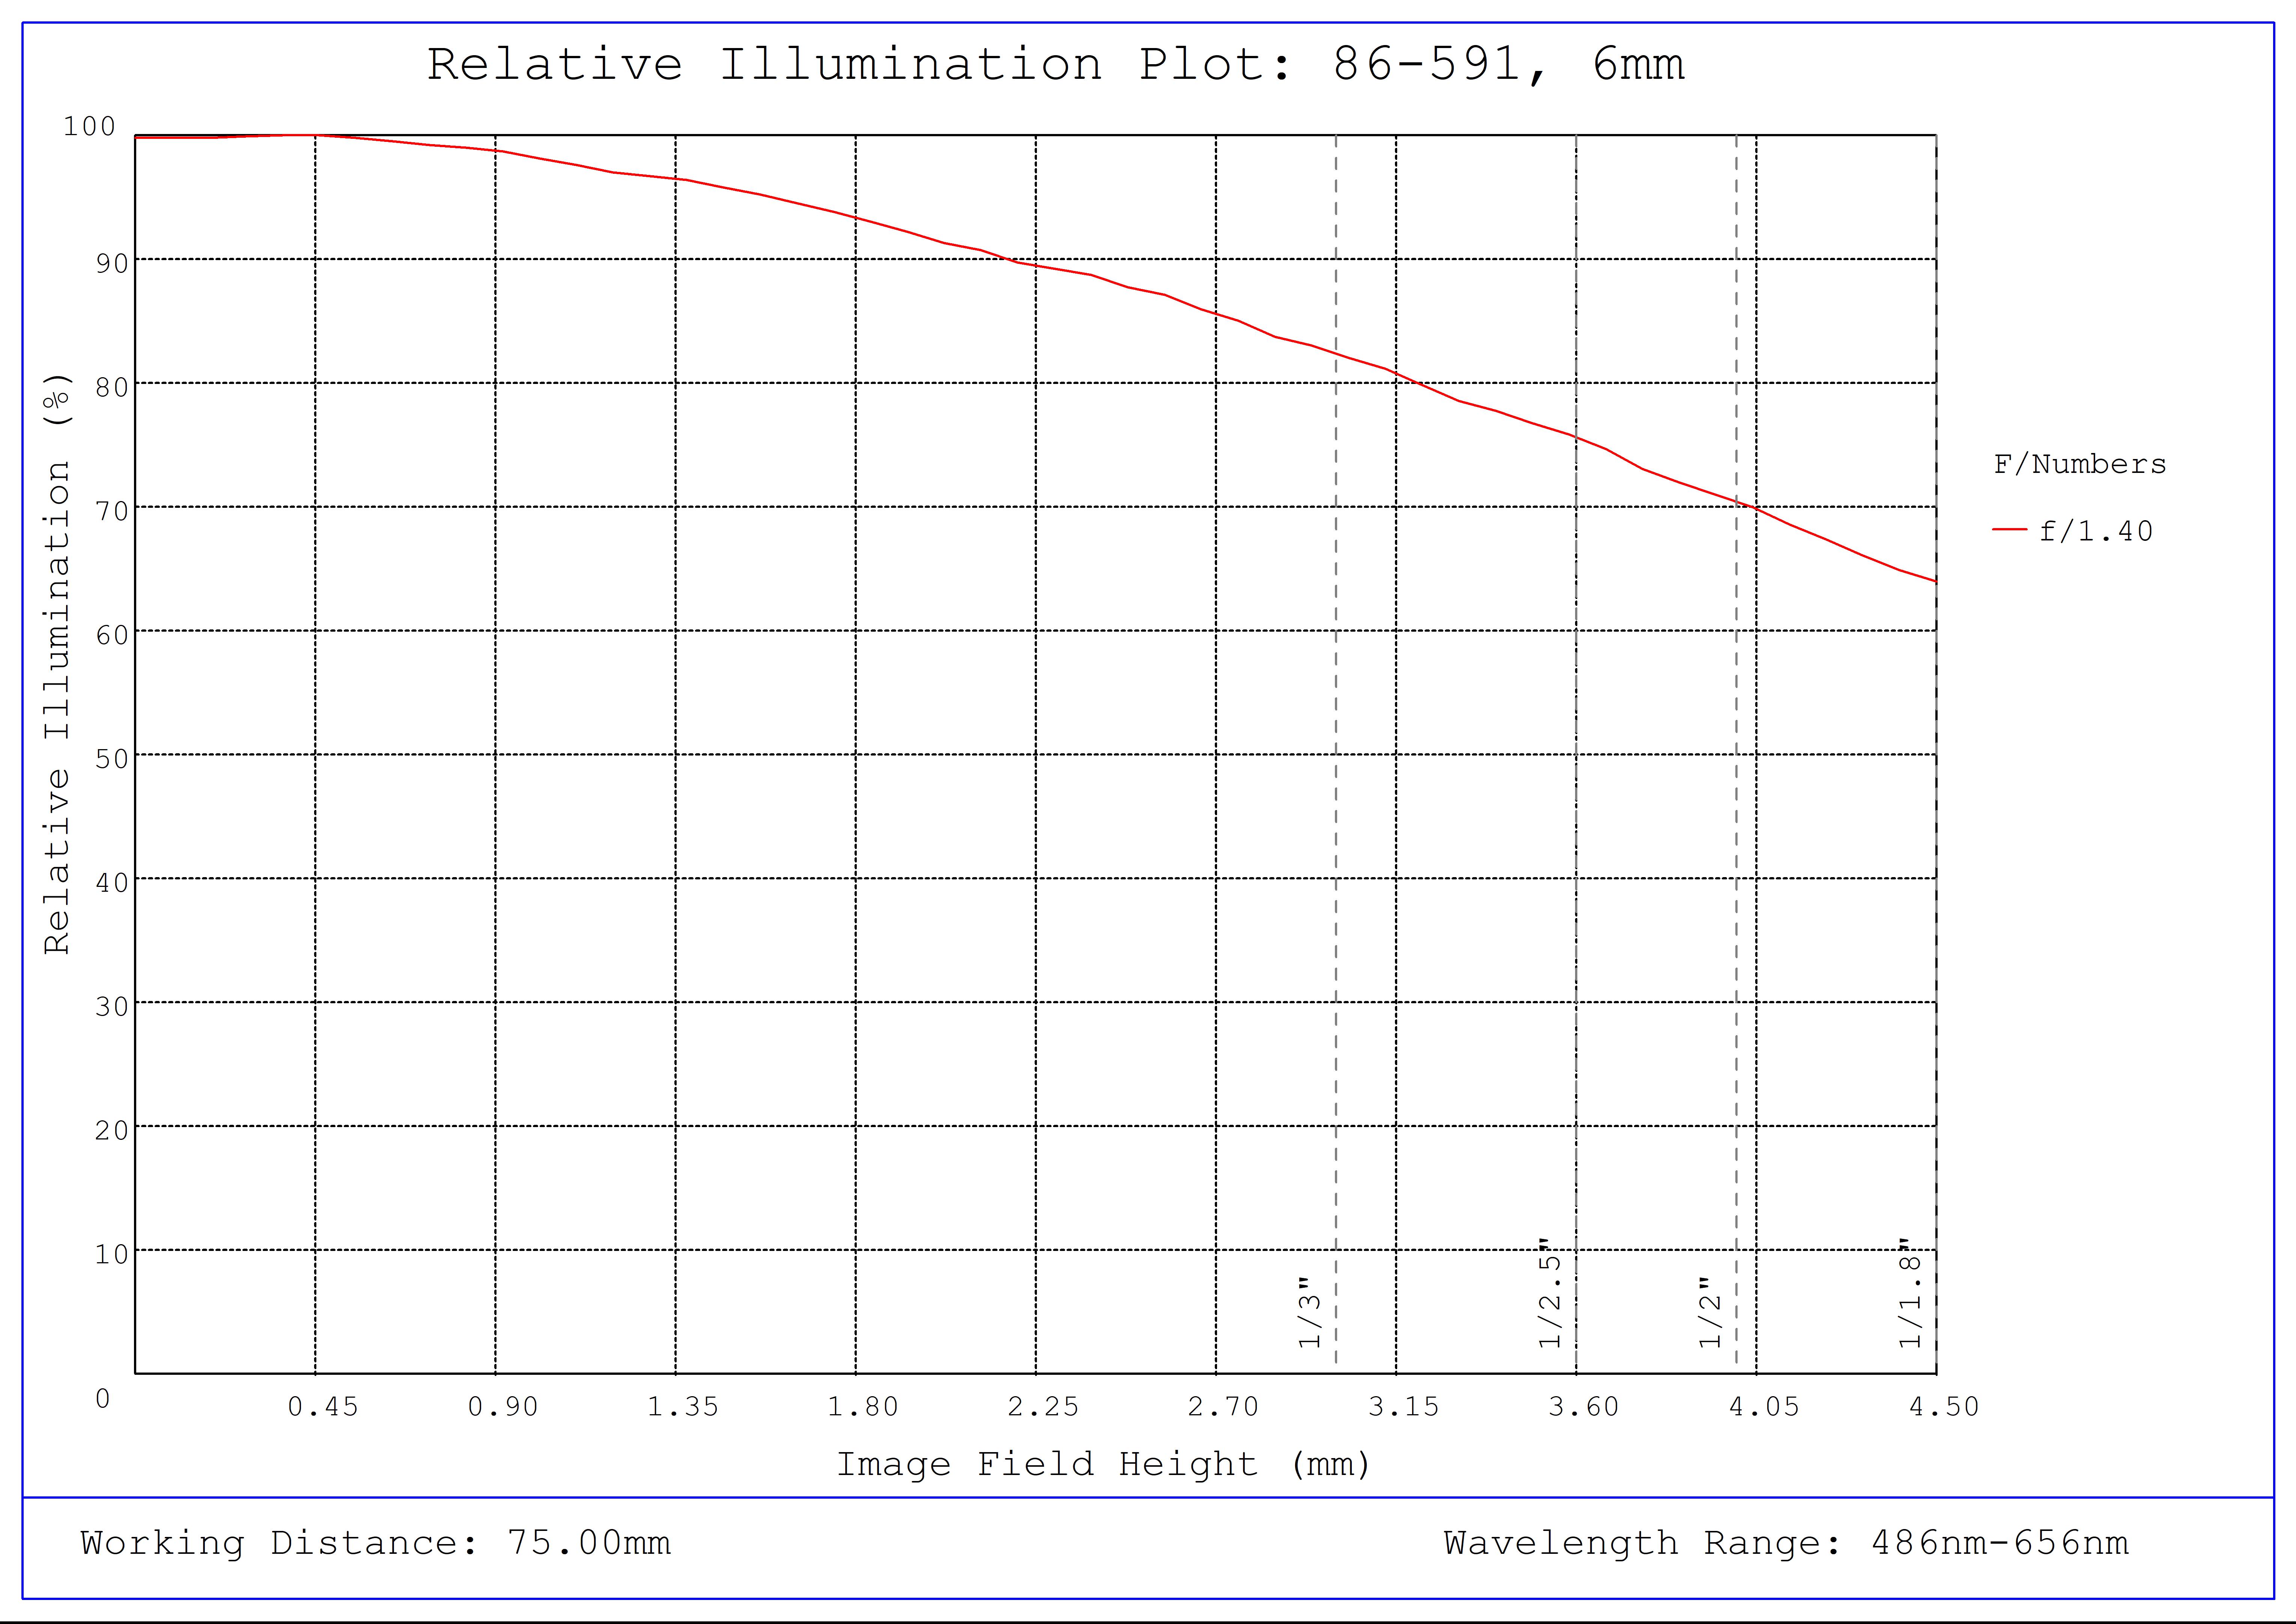 #86-591, 6mm, f/1.4 Ci Series Fixed Focal Length Lens, Relative Illumination Plot